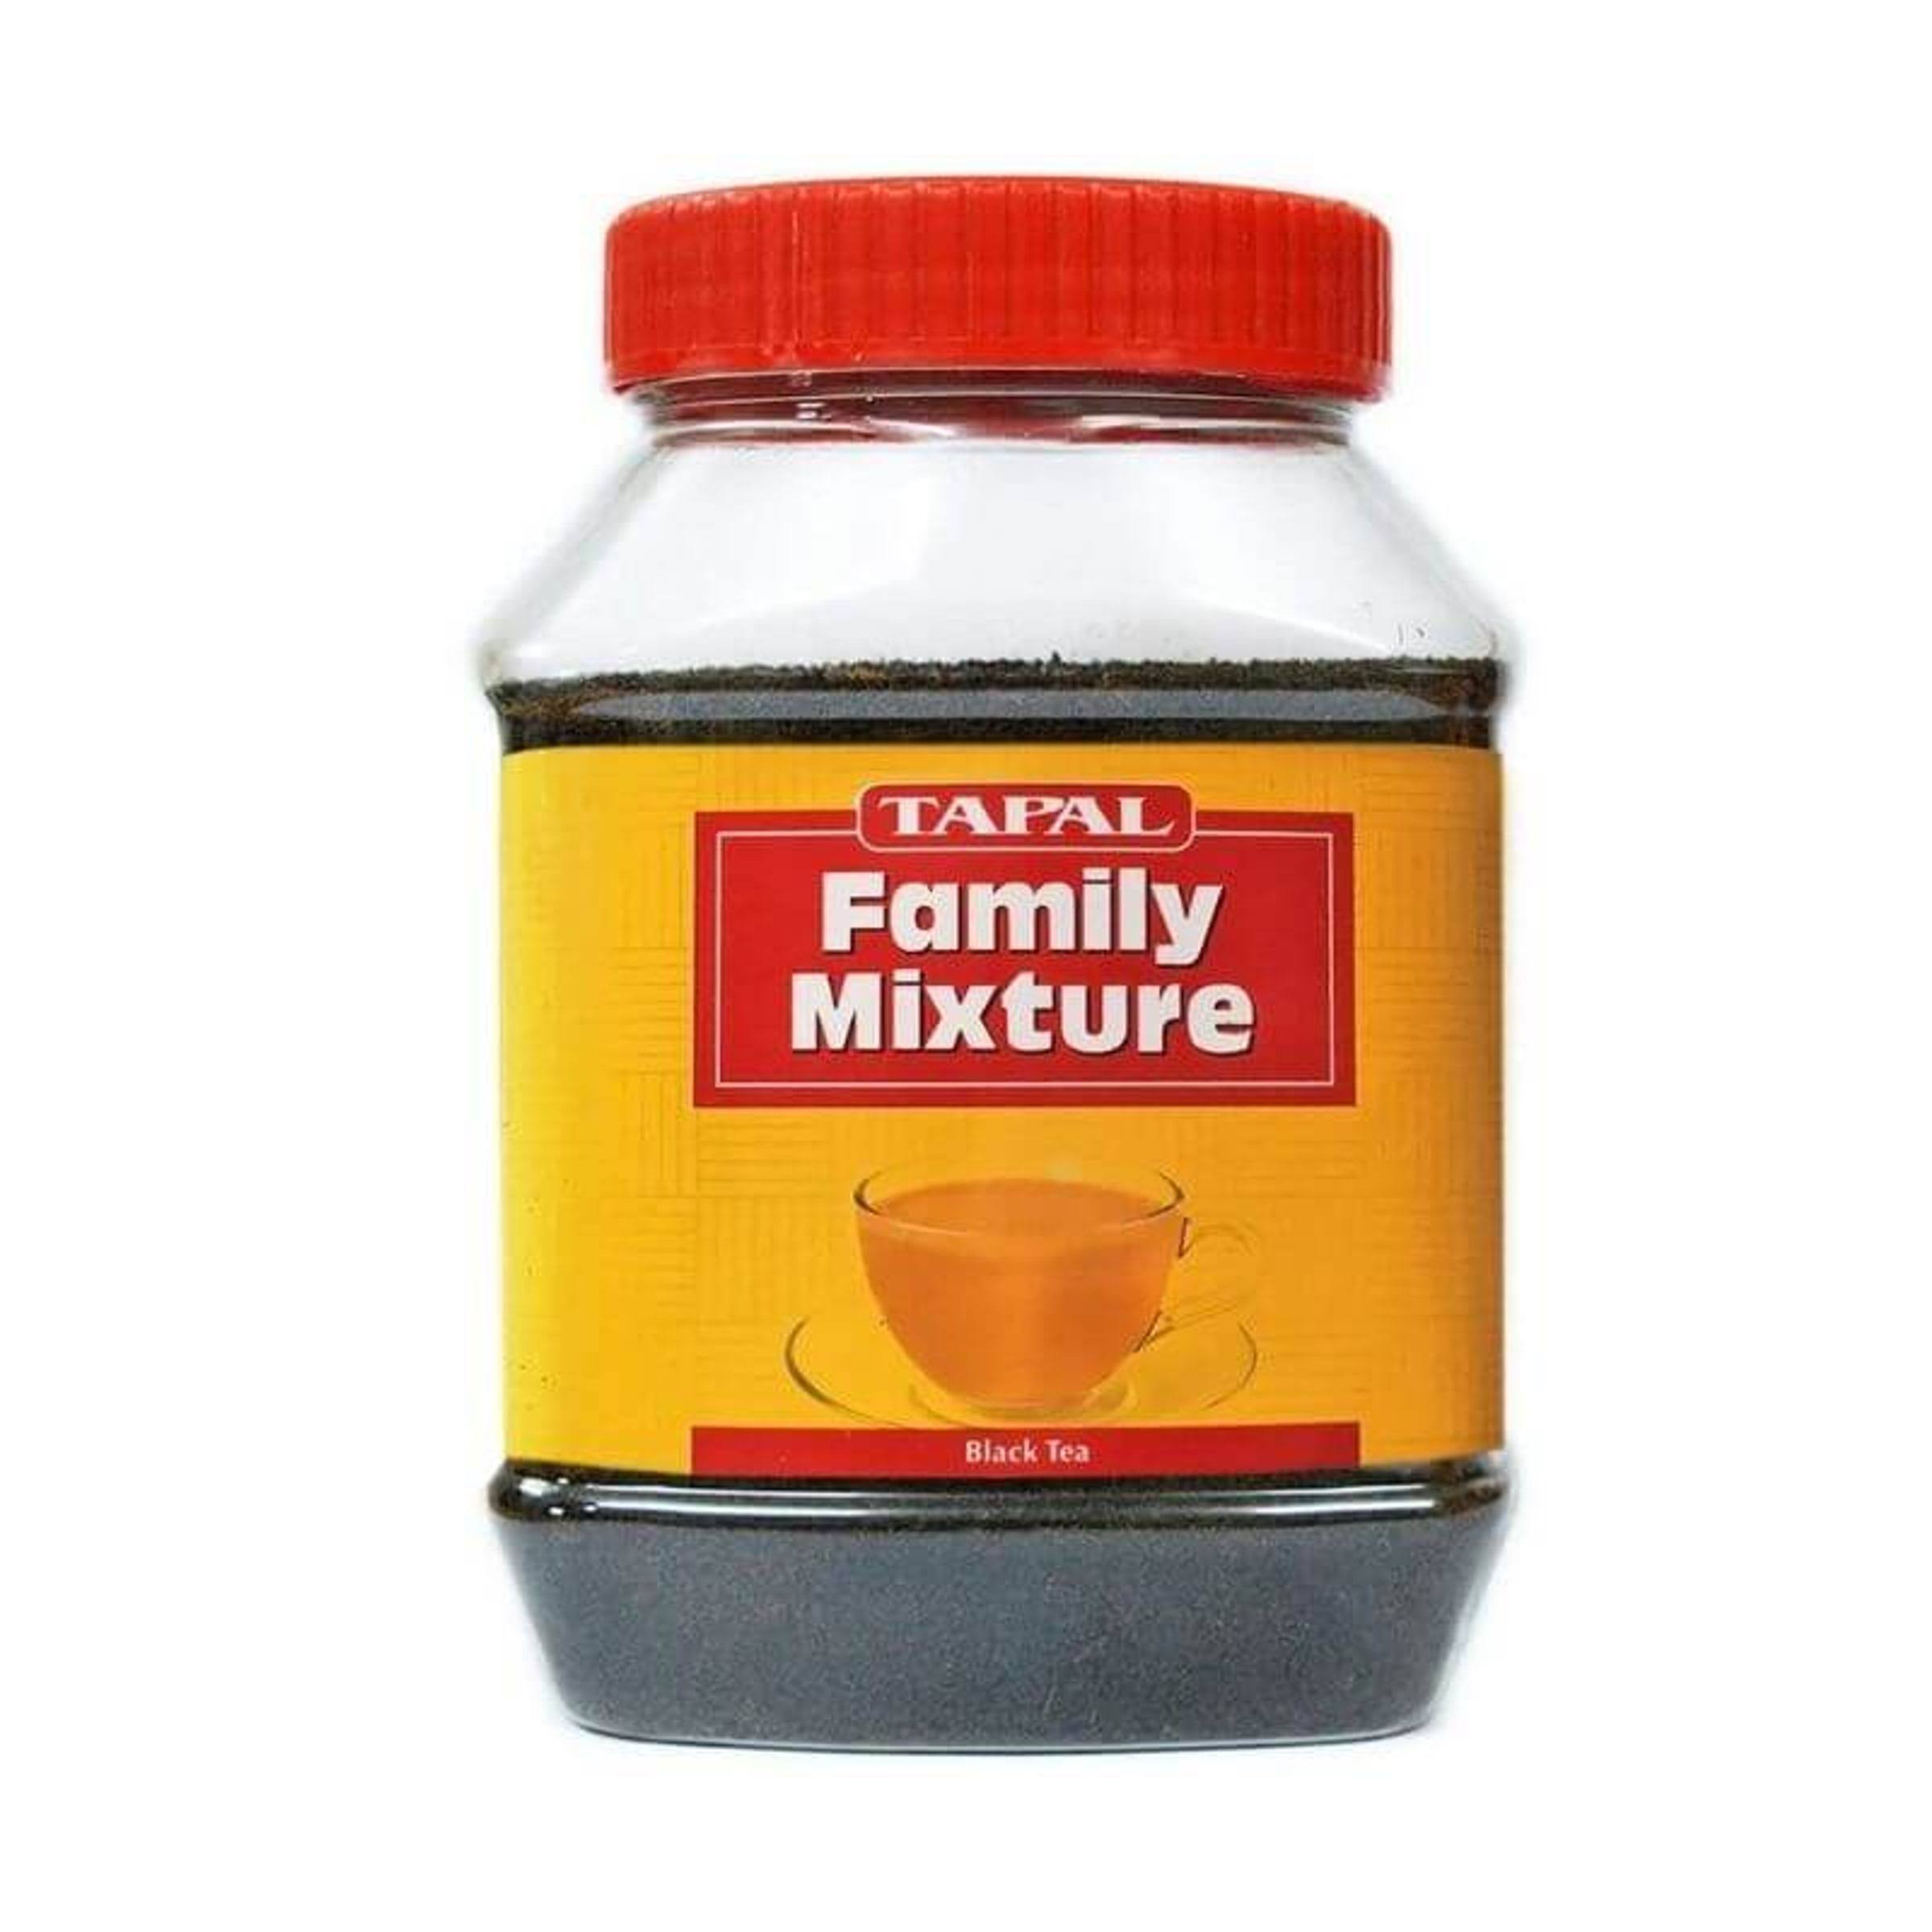 Tapal Family Mixture Loose Black Tea - 450g